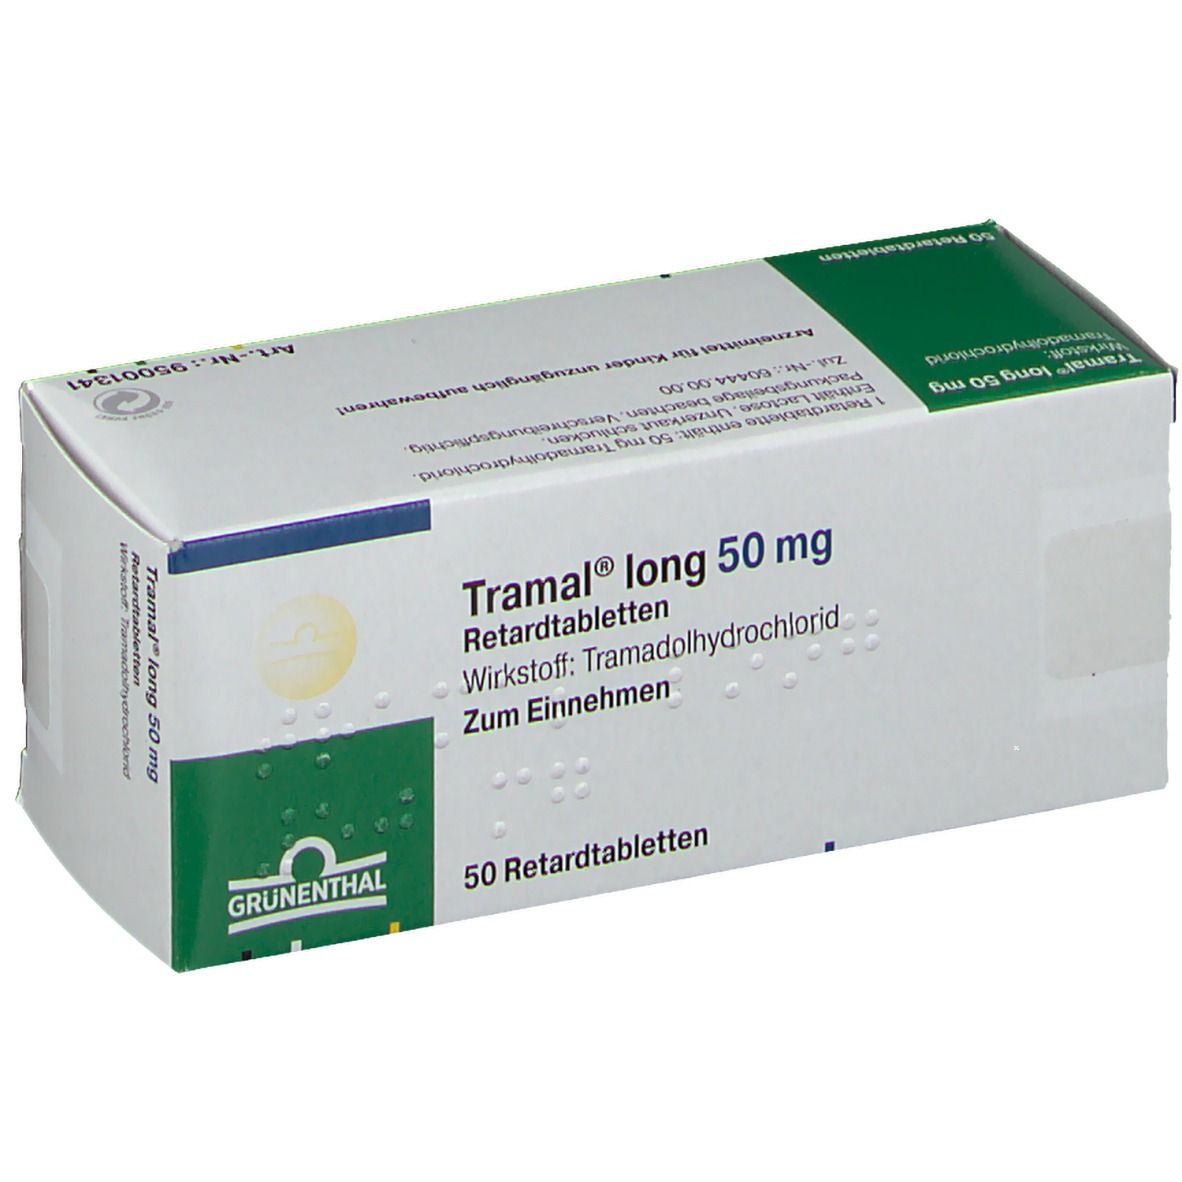 Tramal® long 50 mg